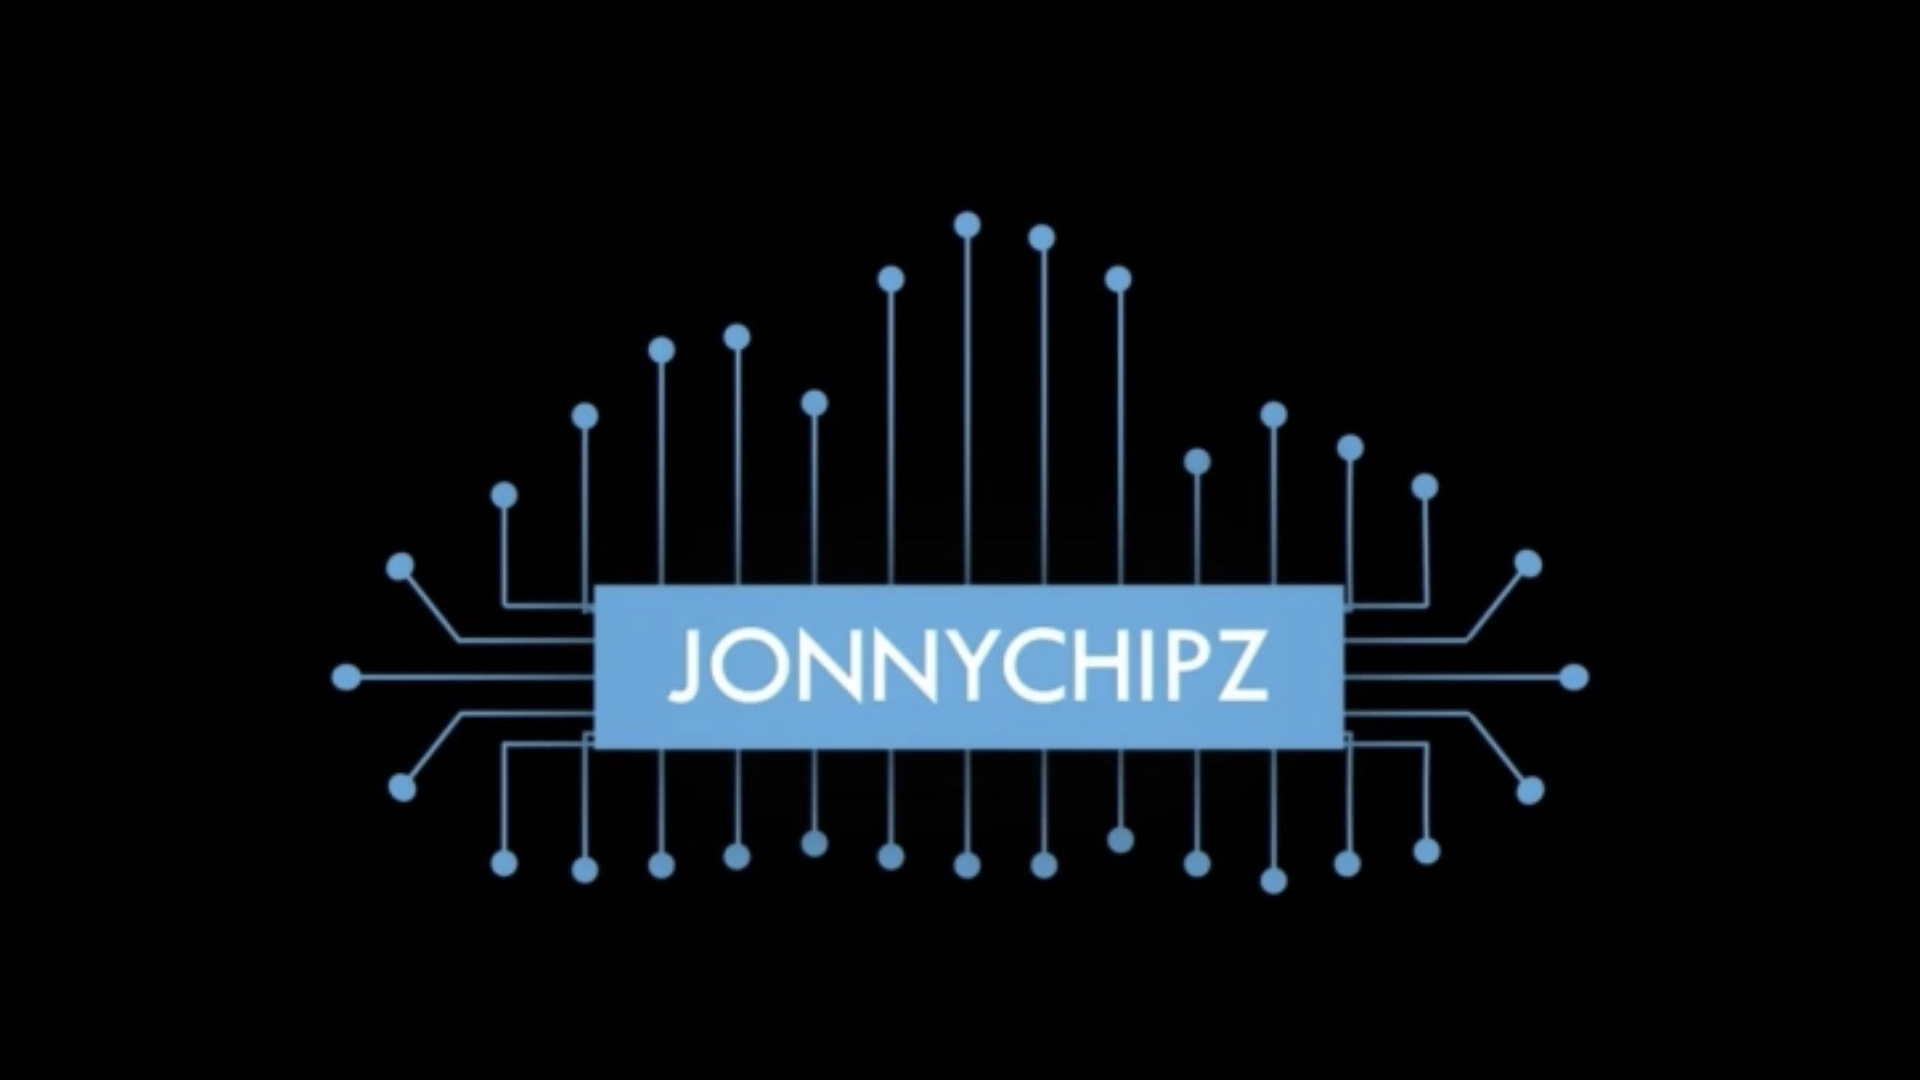 Jonnychipz - In Conversation with Chris Reddington